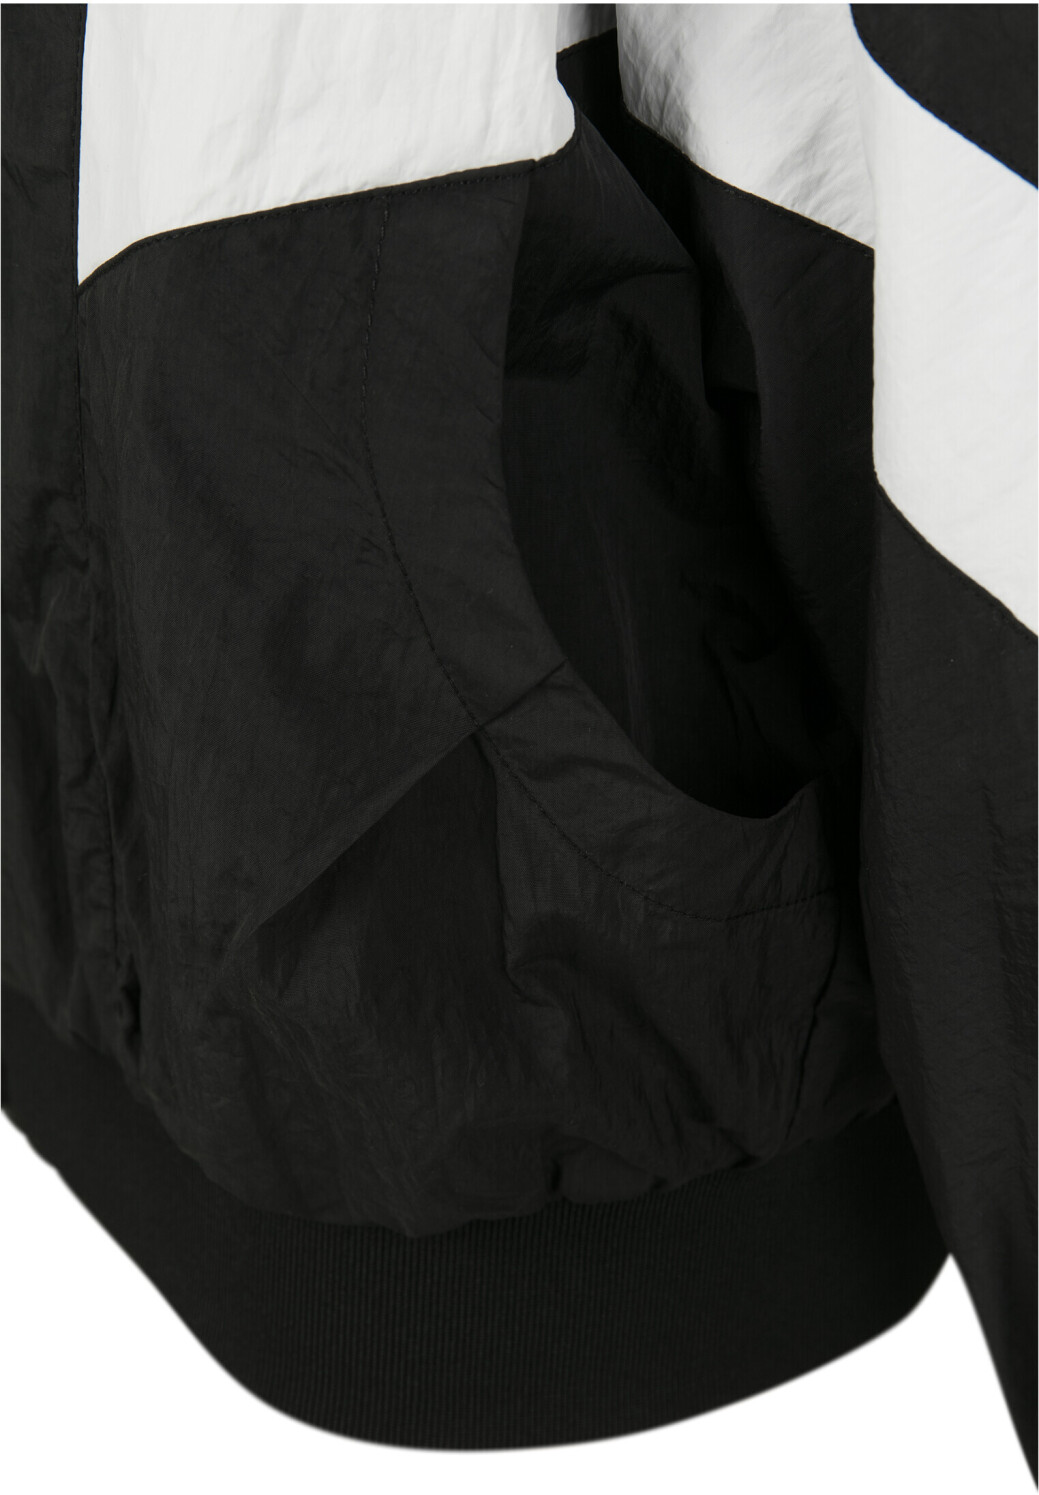 blk/wht € Urban Jacket (TB2664-00050-0046) bei Ladies Batwing Crinkle Preisvergleich Classics ab | 32,99